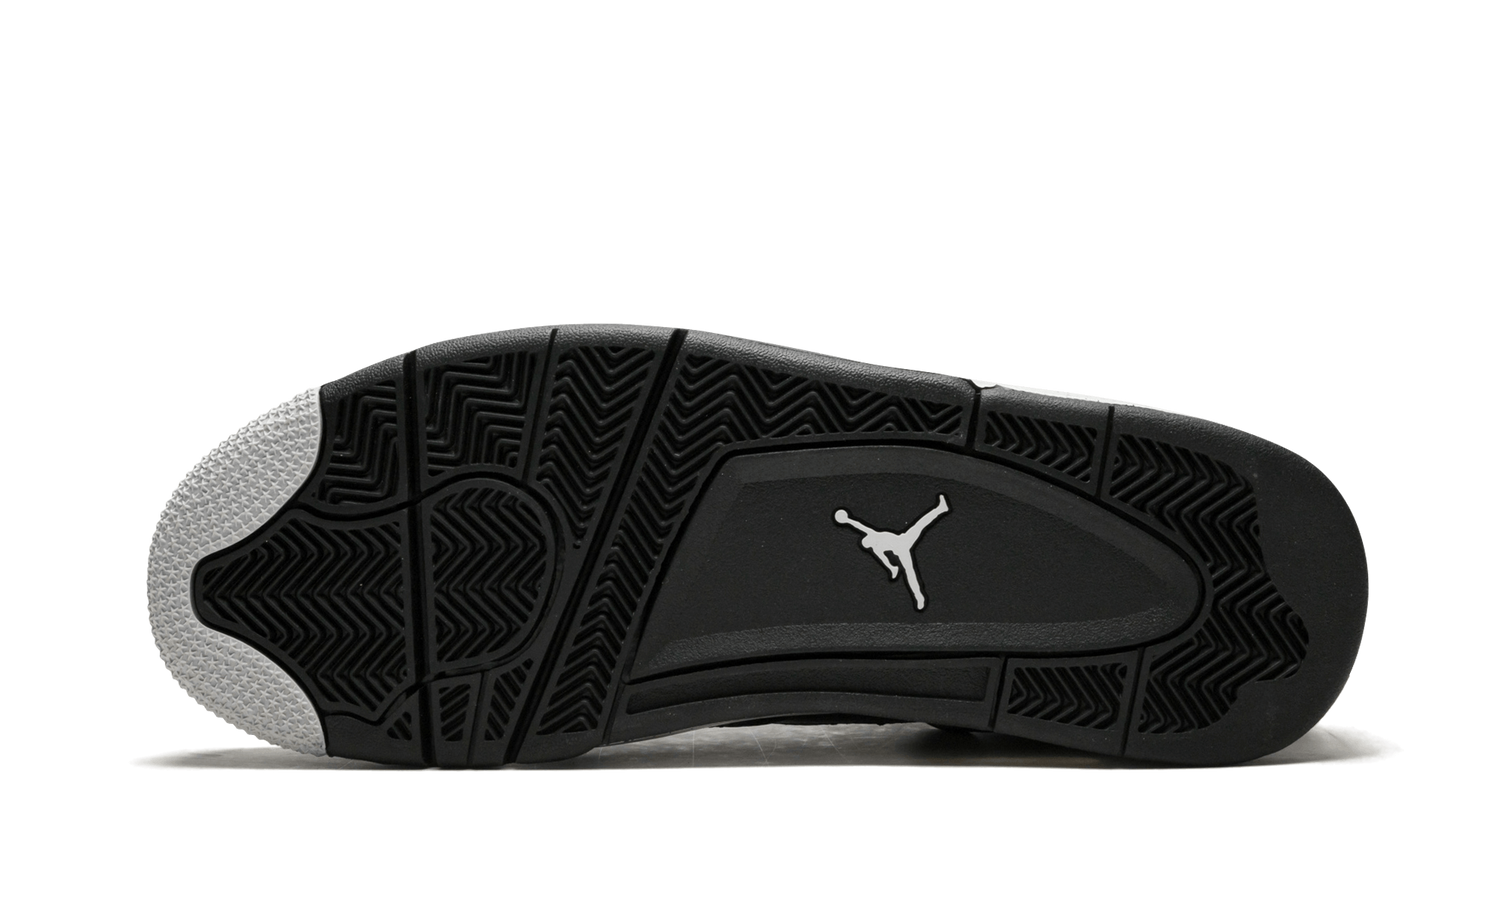 Air Jordan 4 Retro LS “Oreo” - 314254 003 | Grailshop